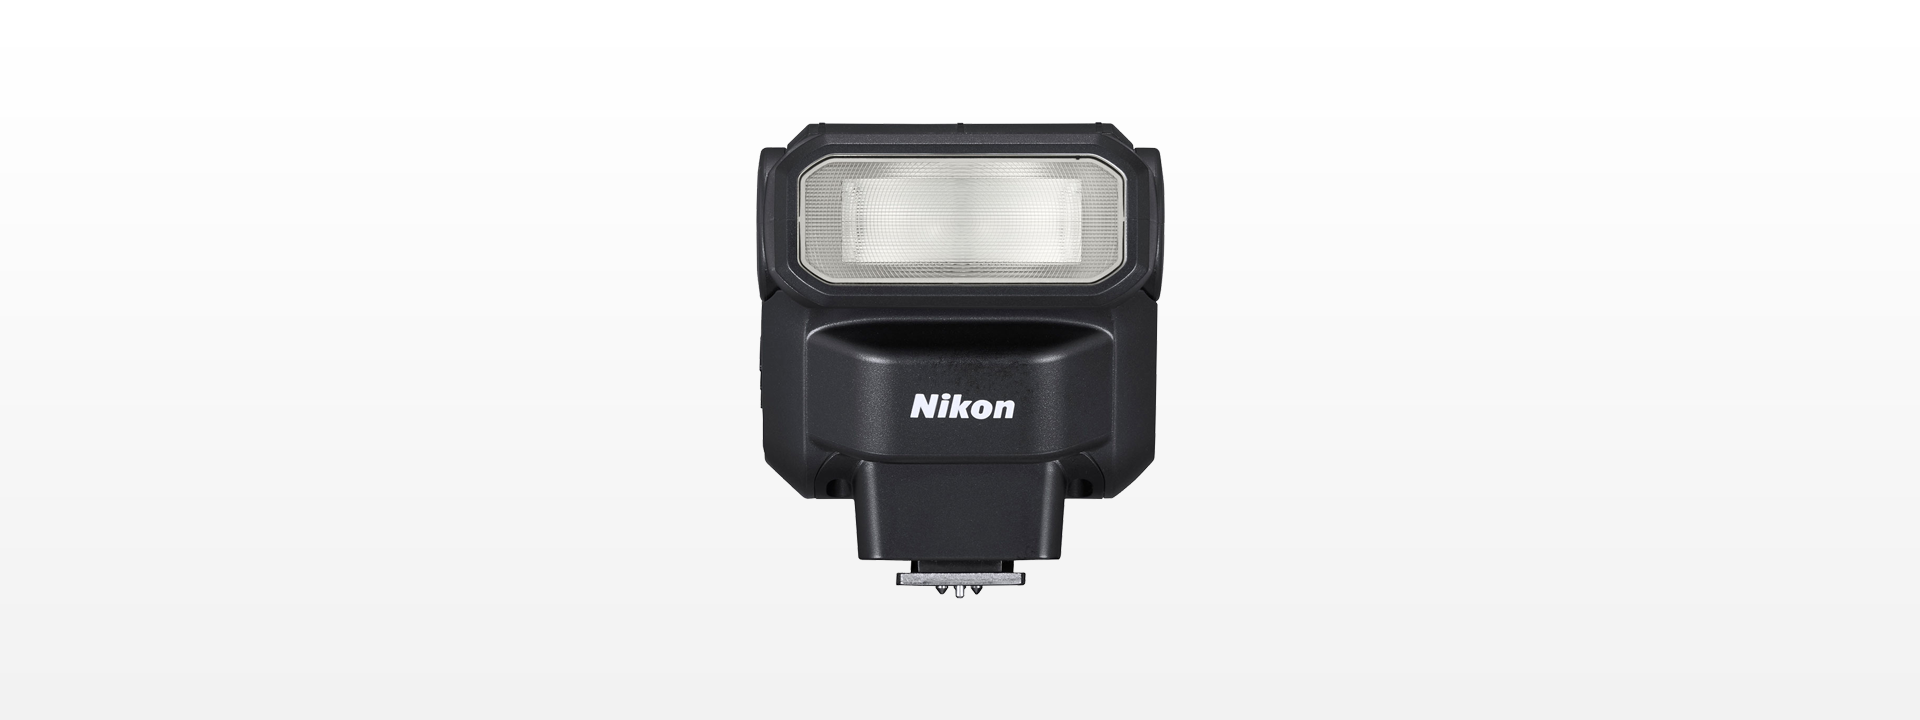 Nikon スピードライトSB-300 ☆1/4以降発送☆ - www.macaluminio.com